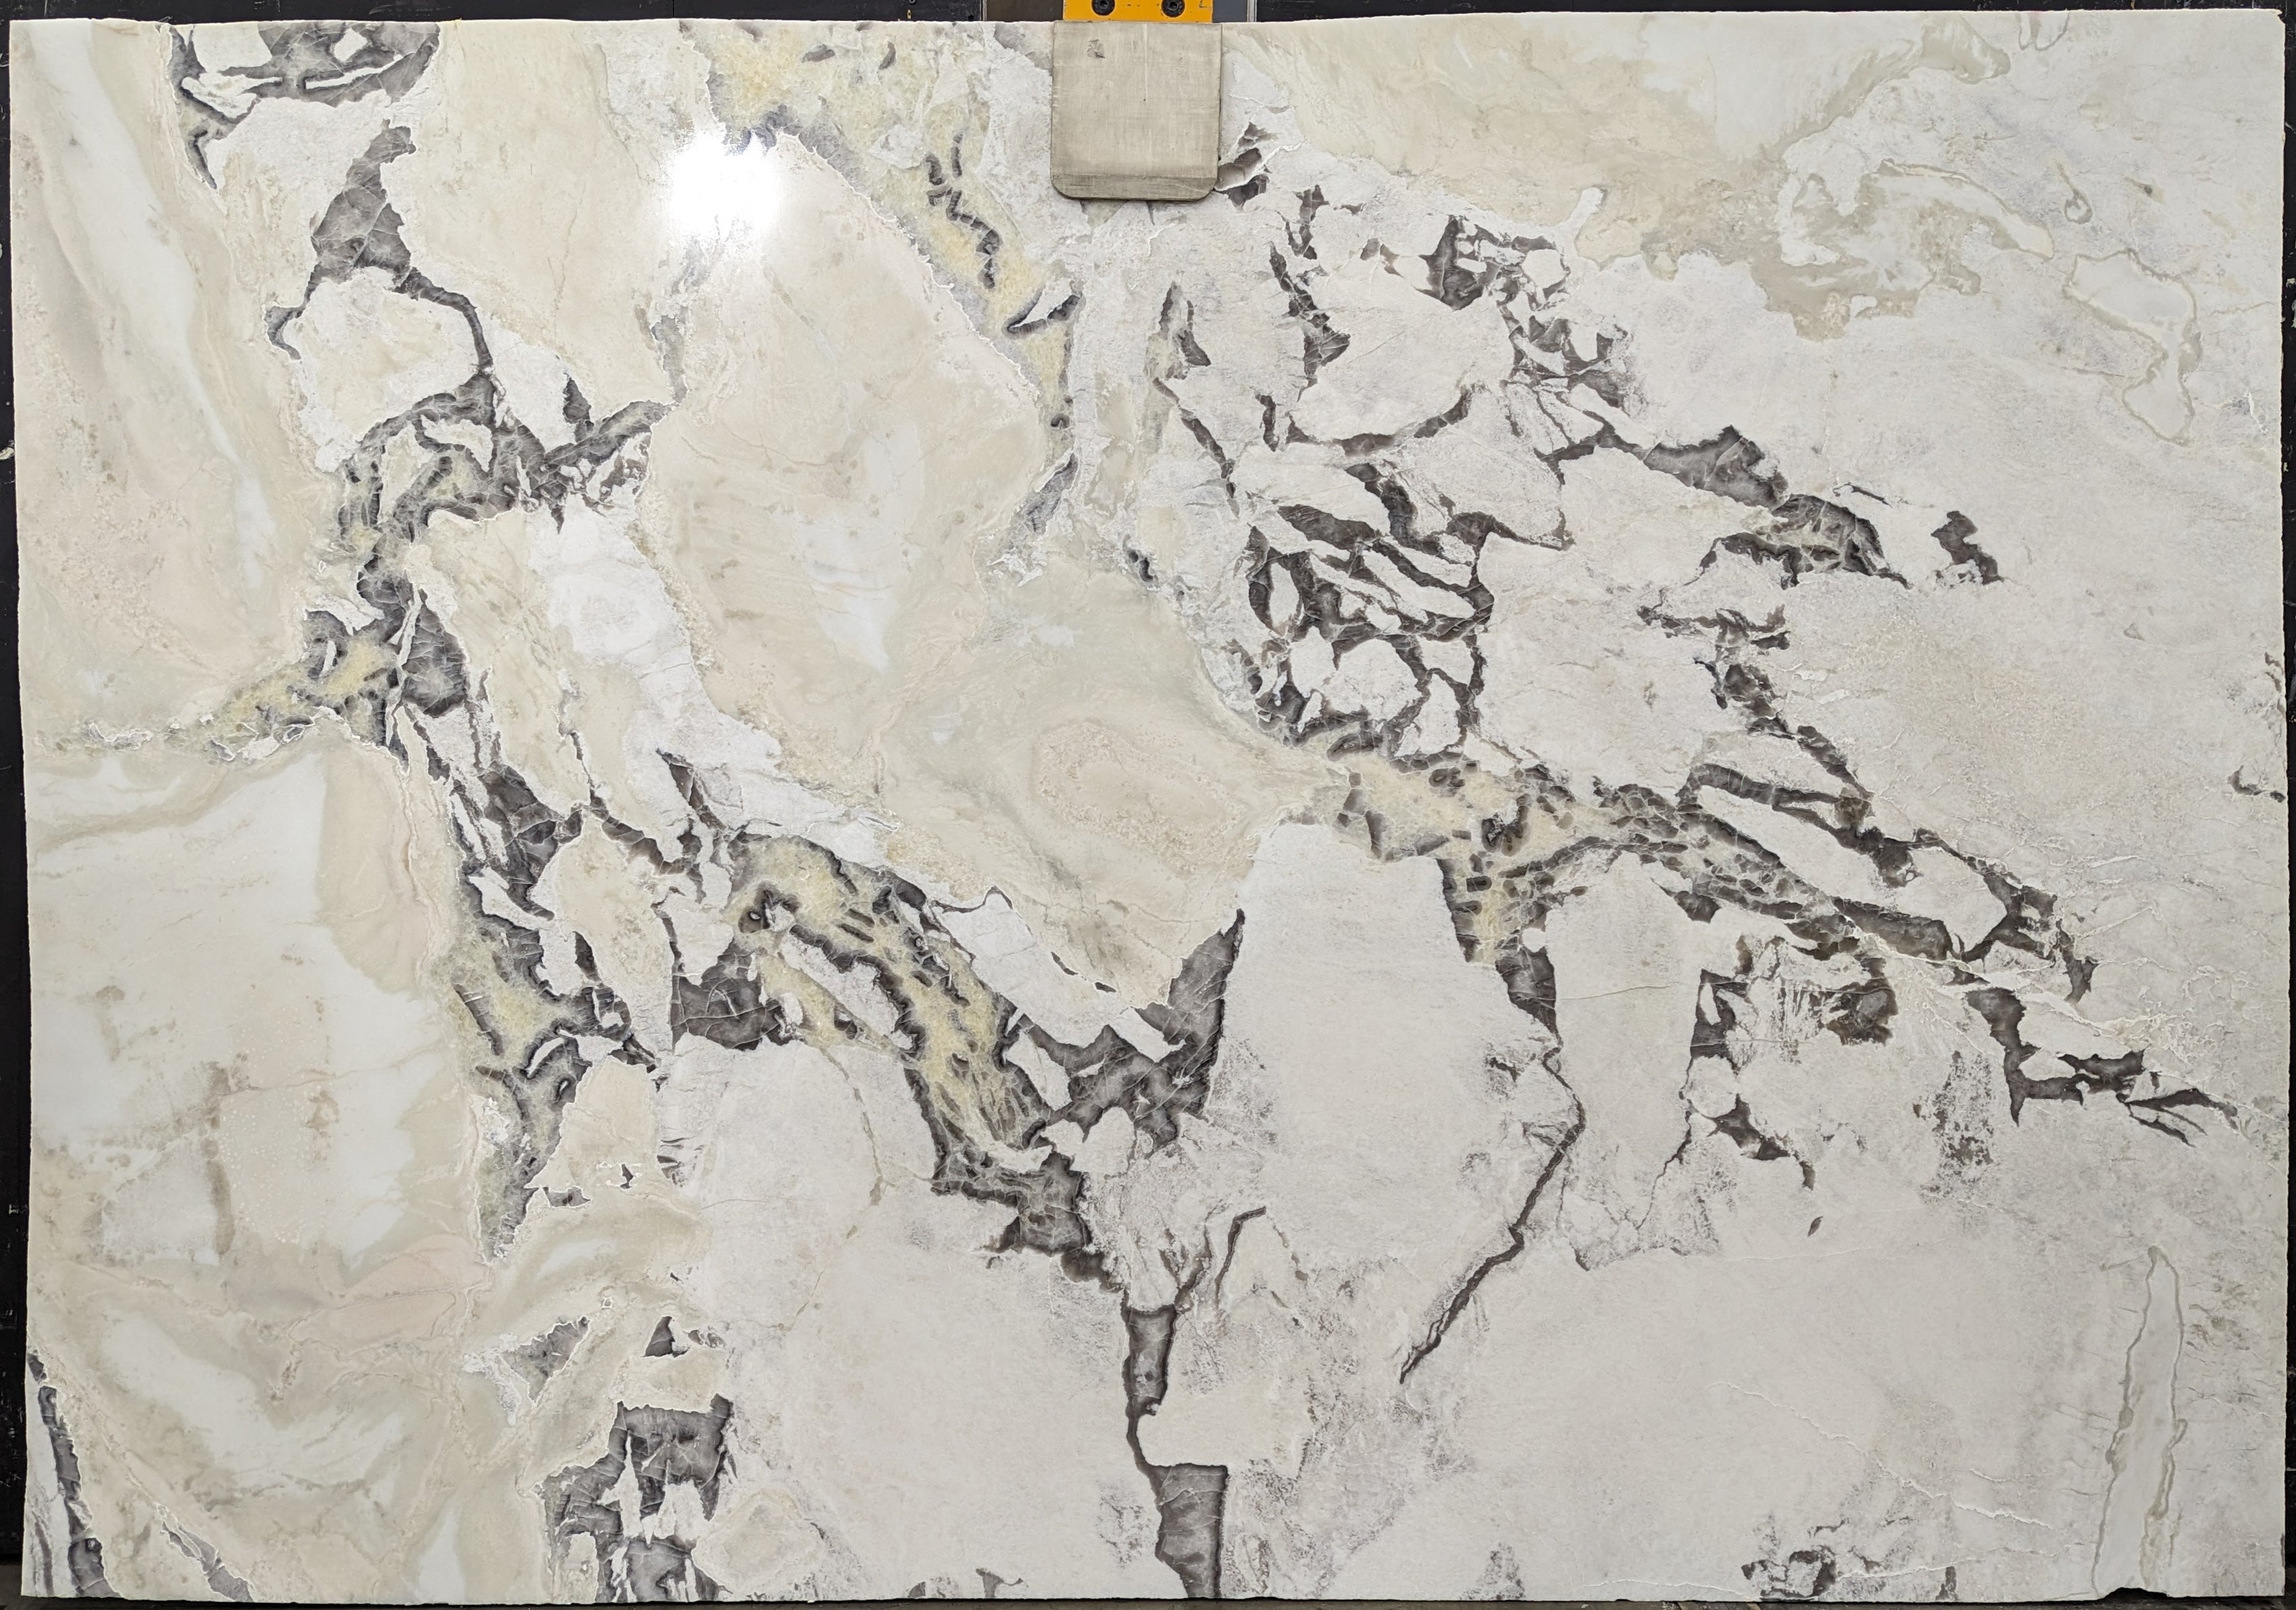  Caribbean Island Marble Slab 3/4  Polished Stone - 787#22 -  77x111 